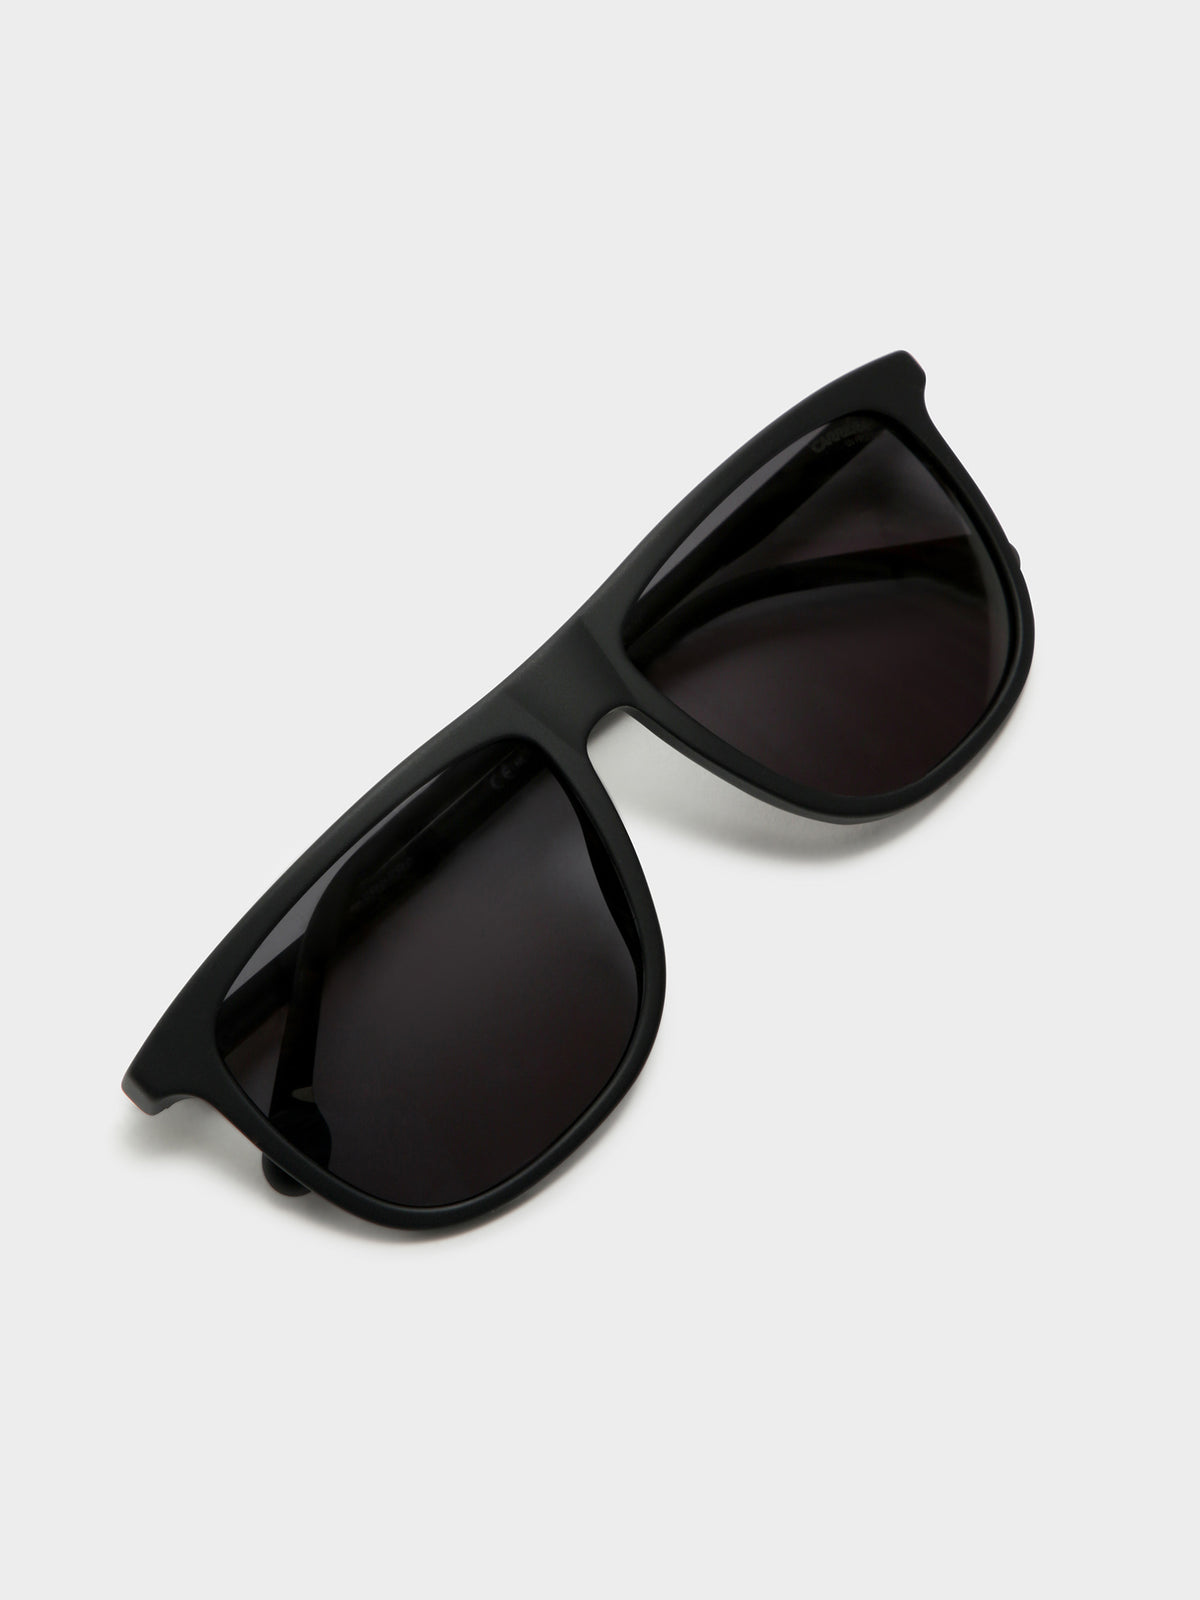 Carrera 218/S 003 Sunglasses in Matte Black